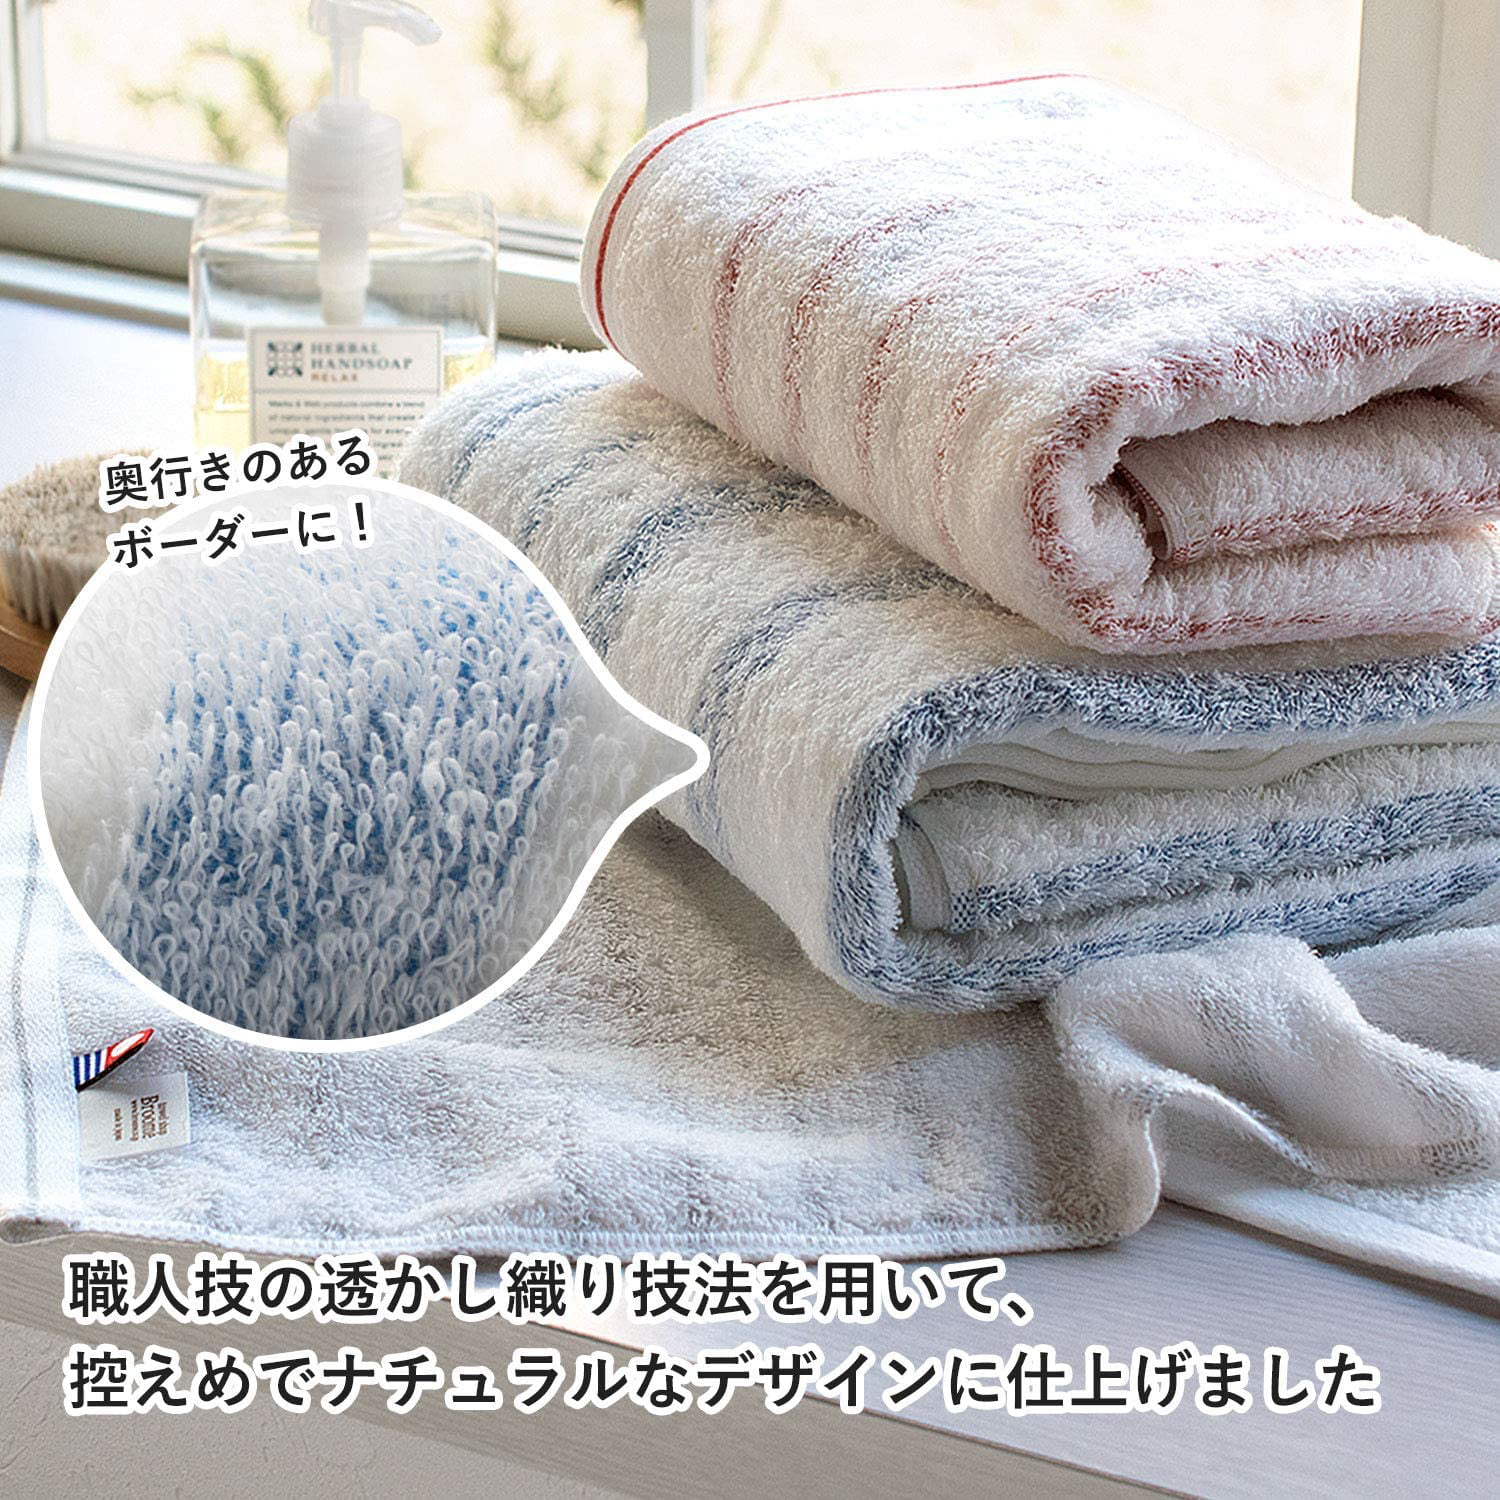 Oruta Bath Towel Stripe; Set Of 2 Blue F/S w/Tracking# Japan Imabari CYBERL 